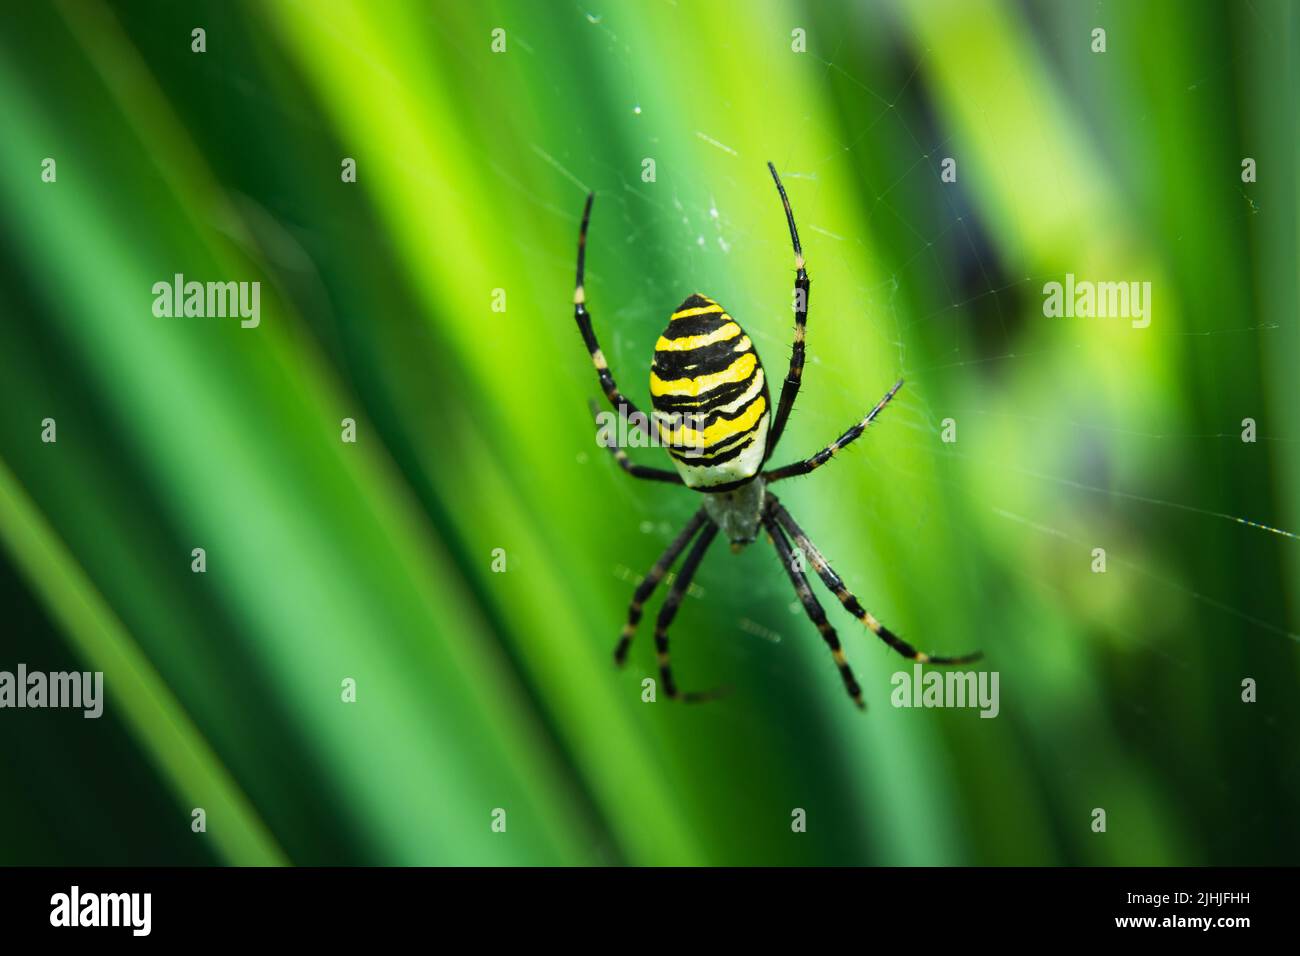 Argiope bruennichi spider on a web and green leaf background Stock Photo